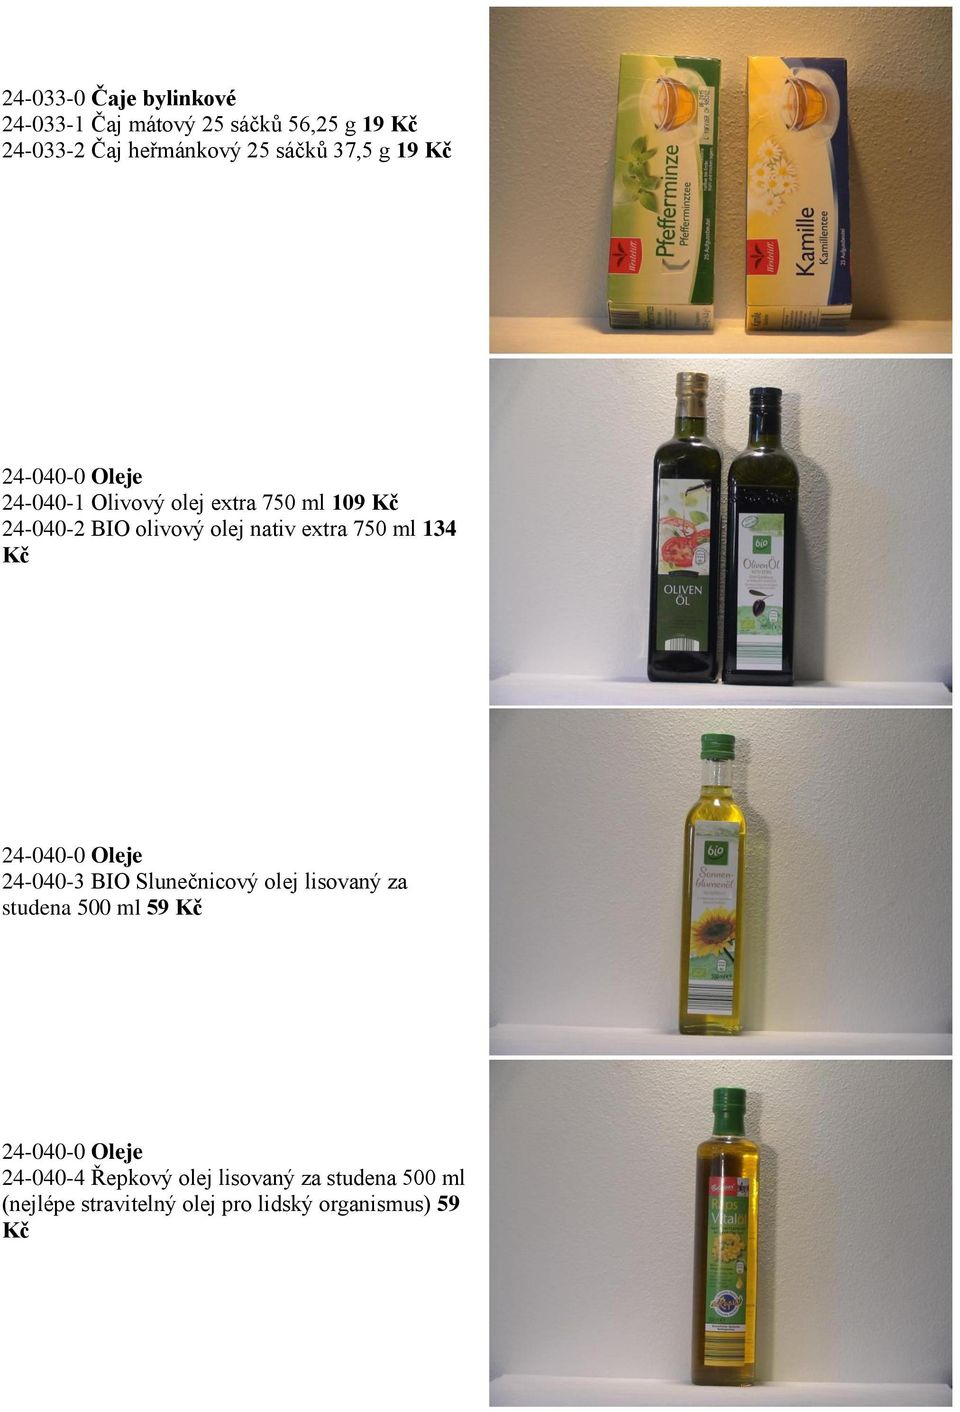 750 ml 134 Kč 24-040-0 Oleje 24-040-3 BIO Slunečnicový olej lisovaný za studena 500 ml 59 Kč 24-040-0